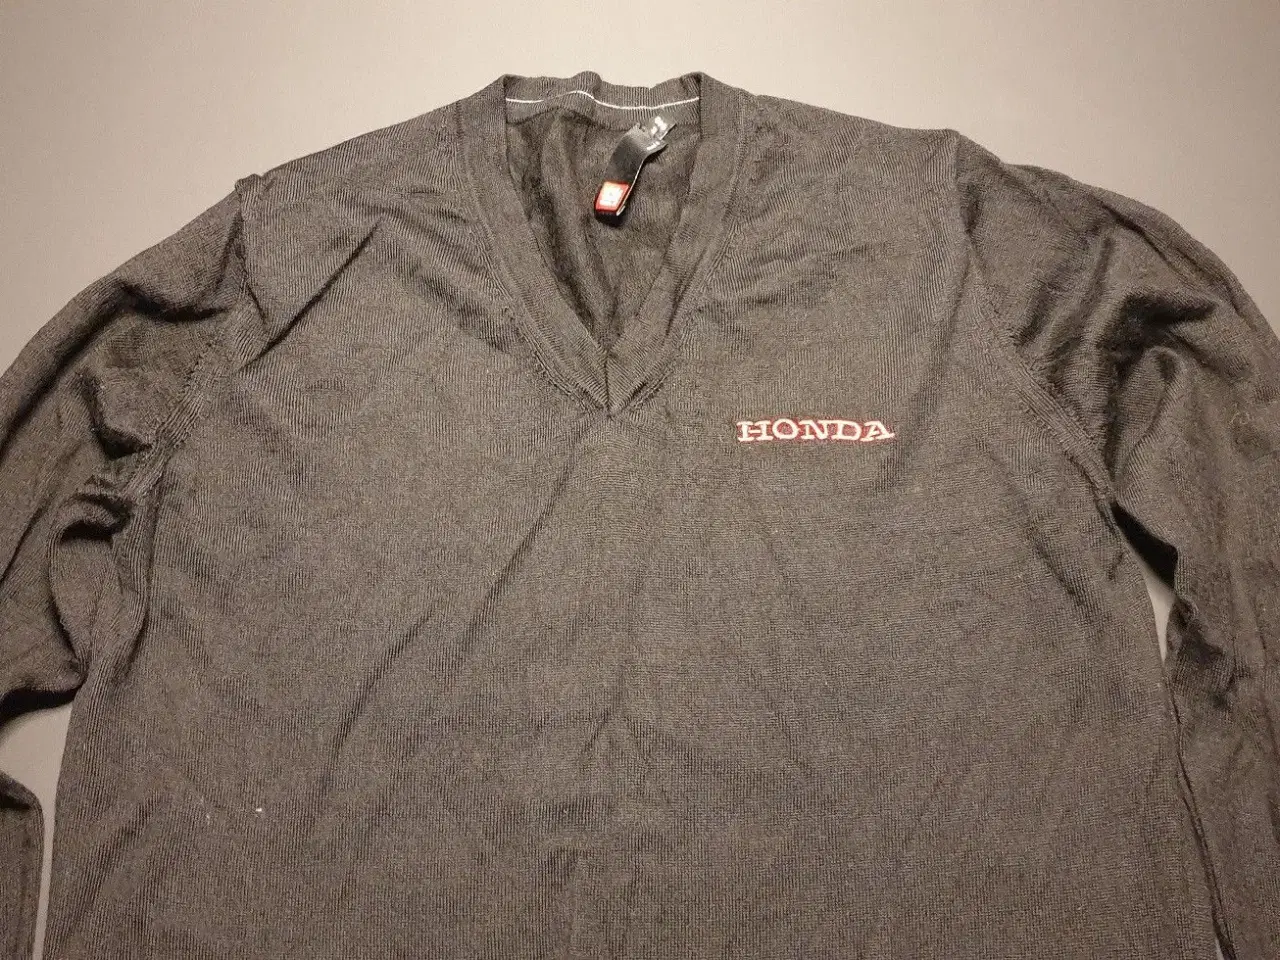 Billede 5 - 6 stk. Honda t-shirts + 3 stk. pullovers